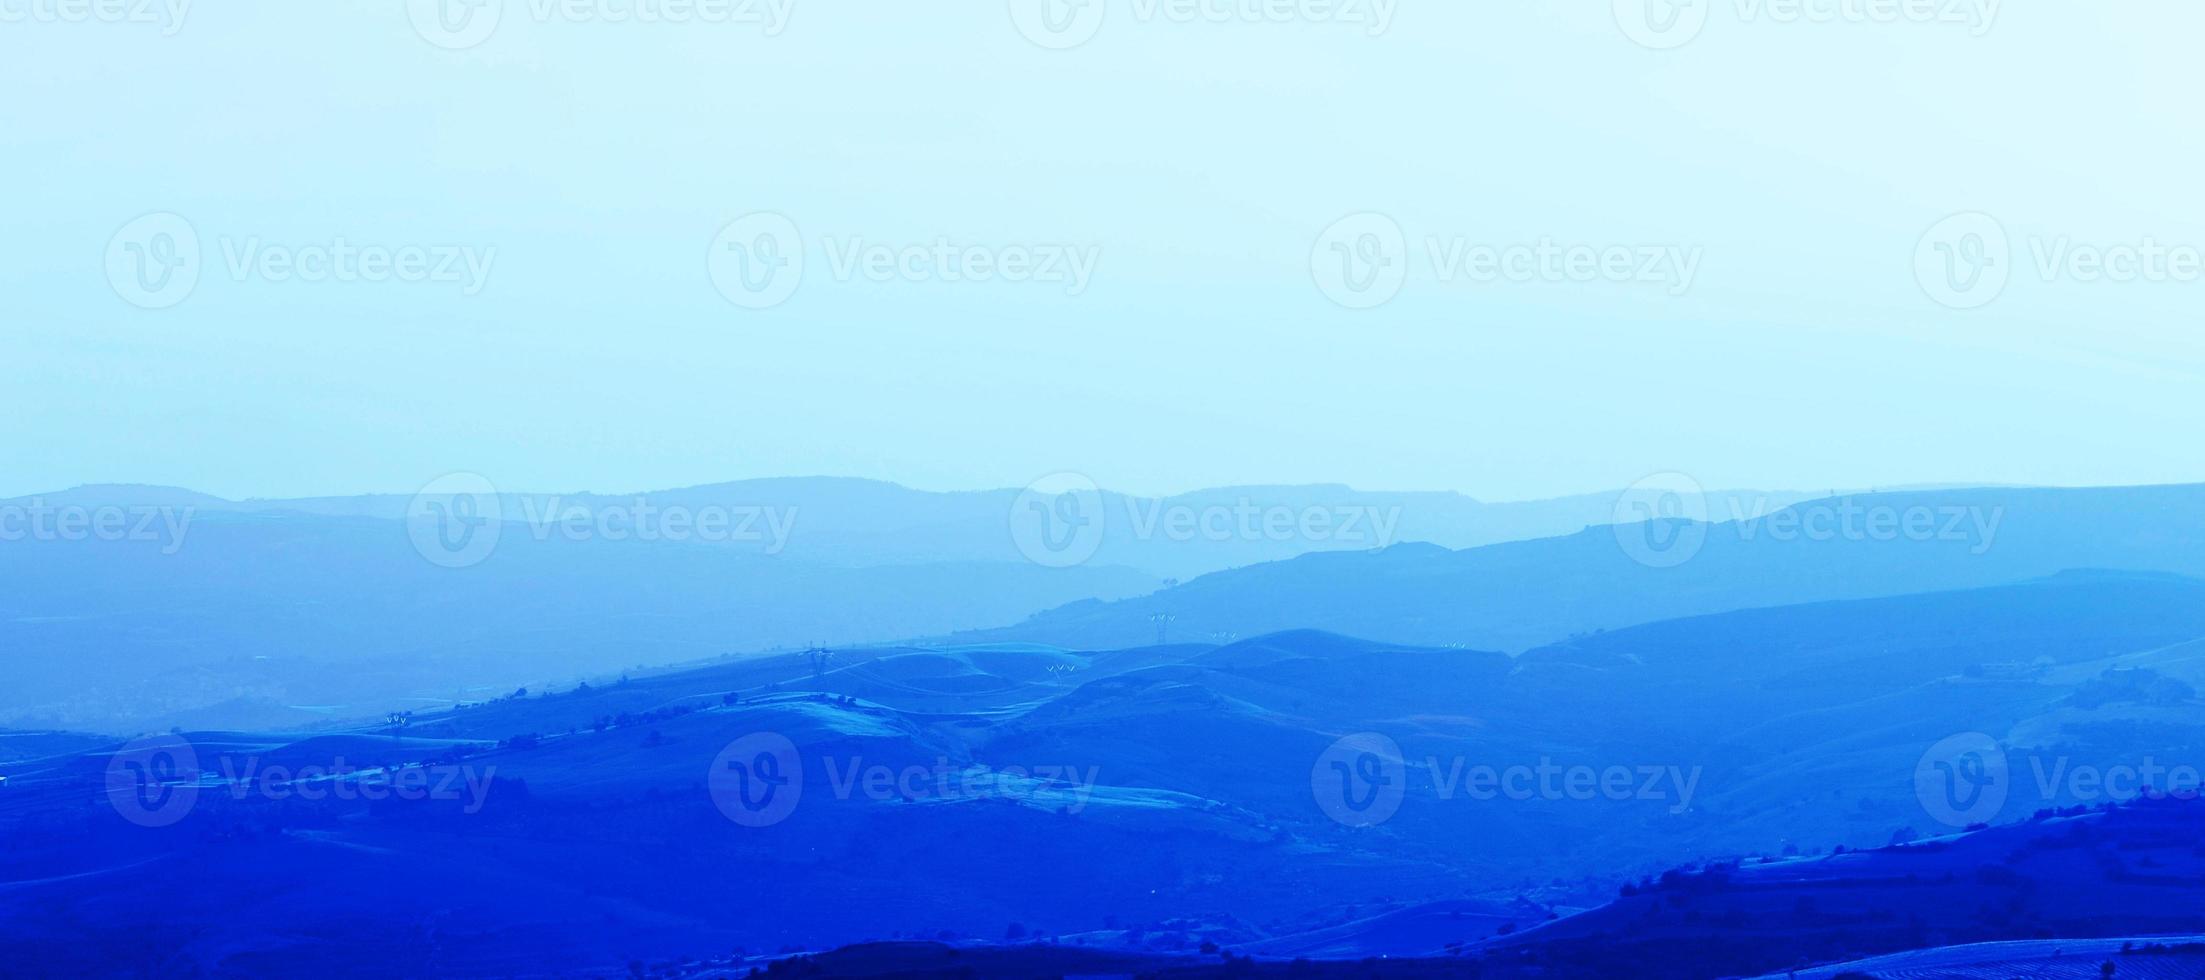 capas de cadenas montañosas apiladas en silueta azul. perspectiva aérea de colinas azules. foto